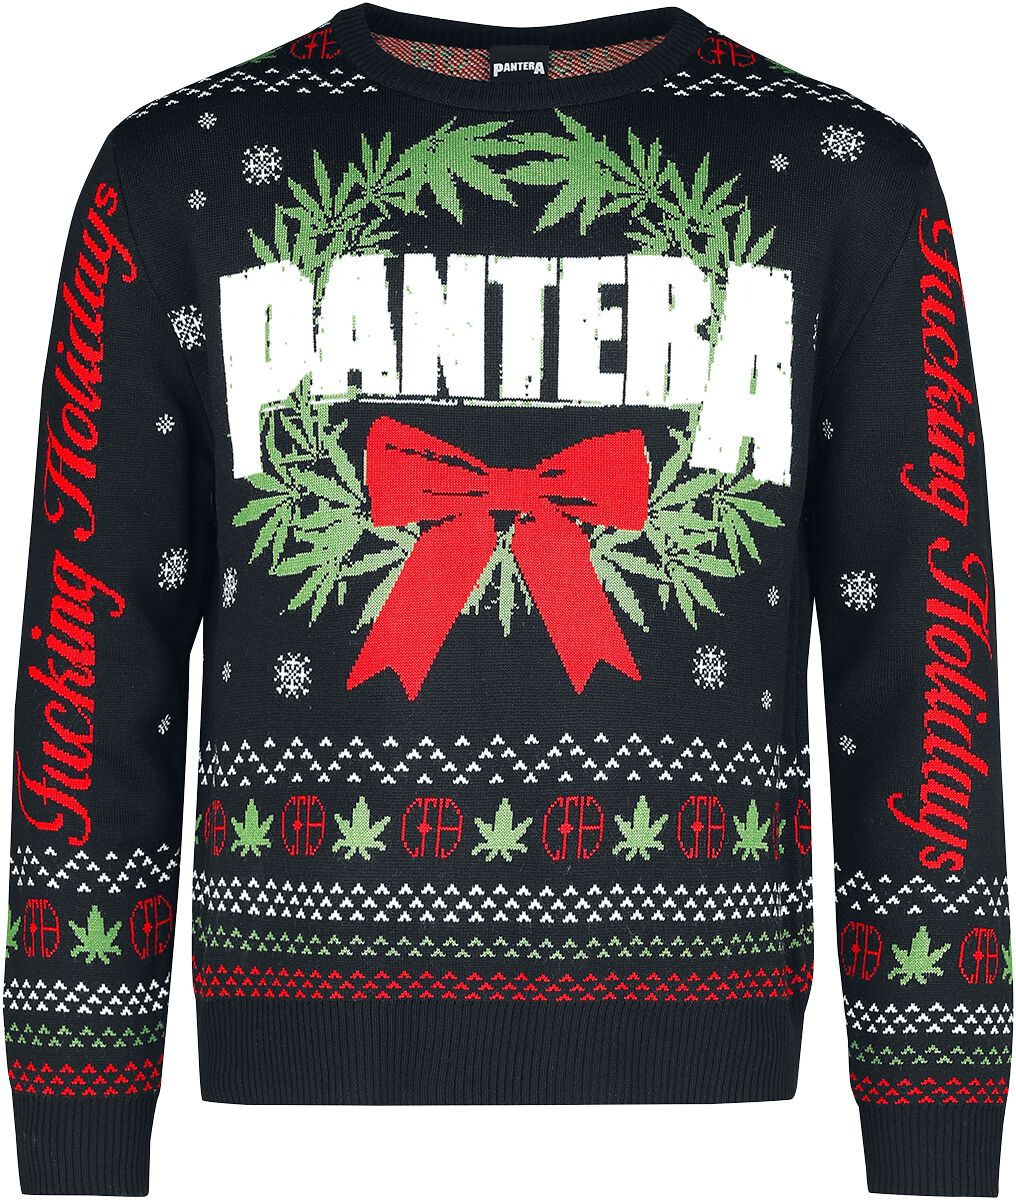 Pantera Holiday Sweater 2022 Christmas jumper multicolour